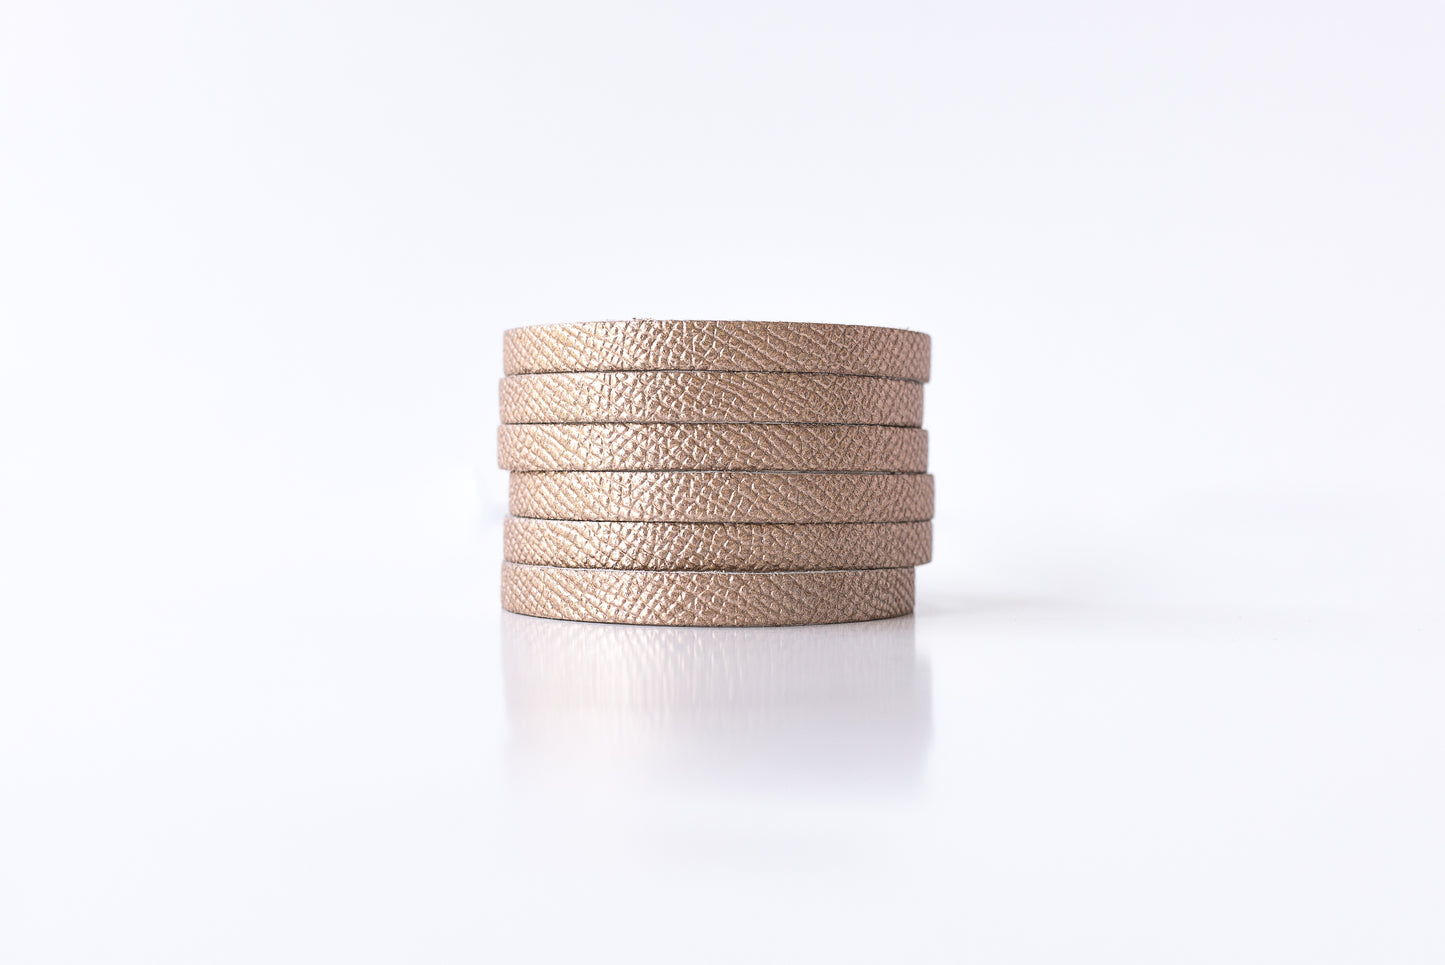 Leather Bracelet / Original Sliced Cuff / White Gold